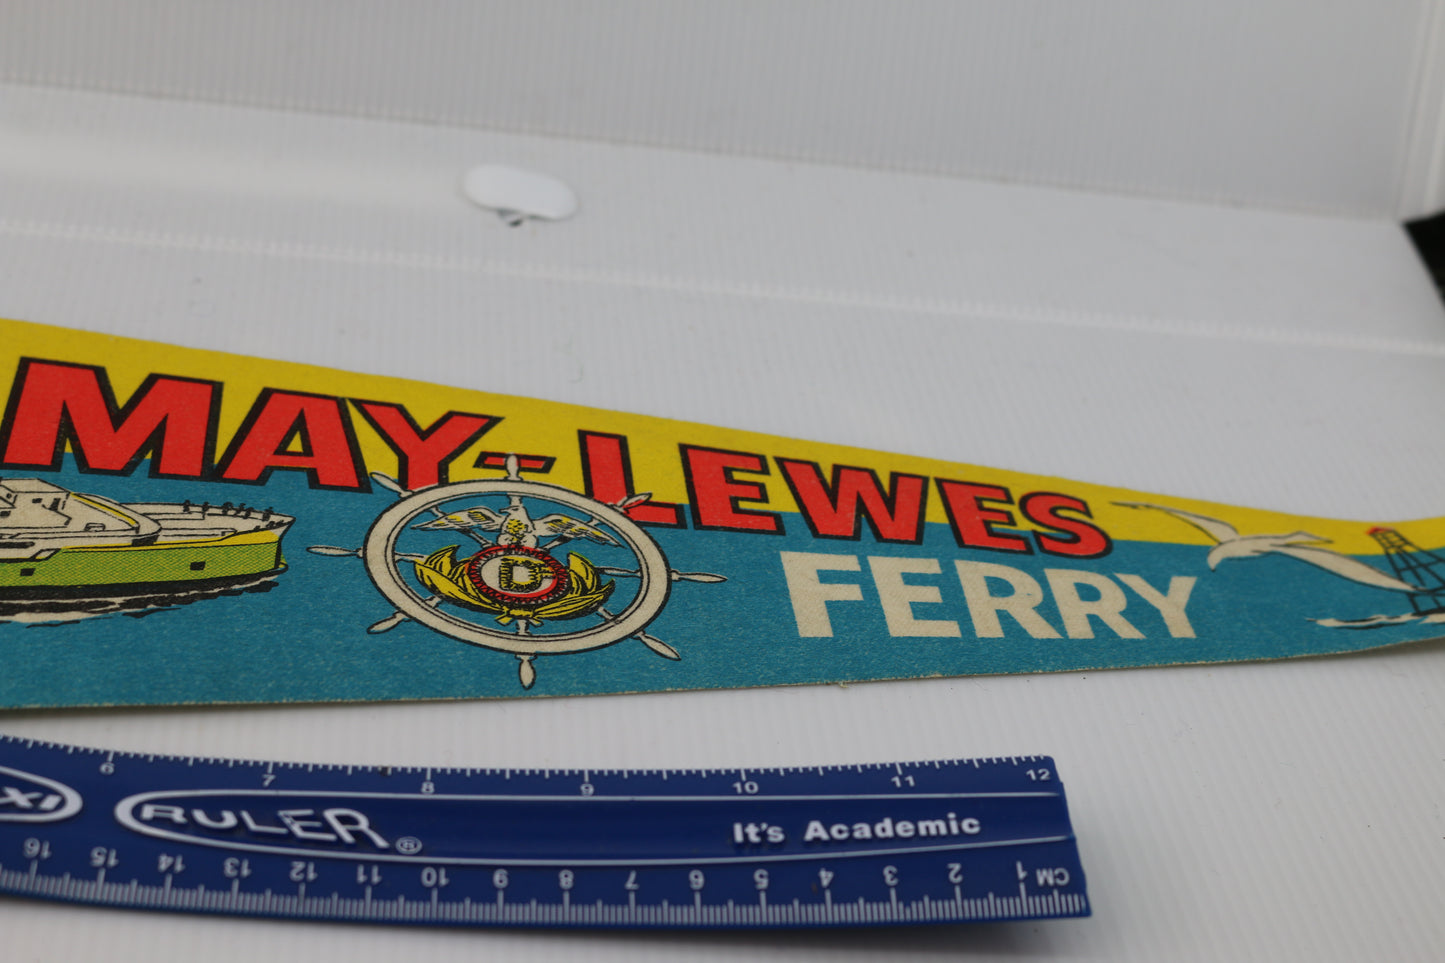 Vintage pennant felt souvenir Cape May-Lewes ferry Impko No.2888900